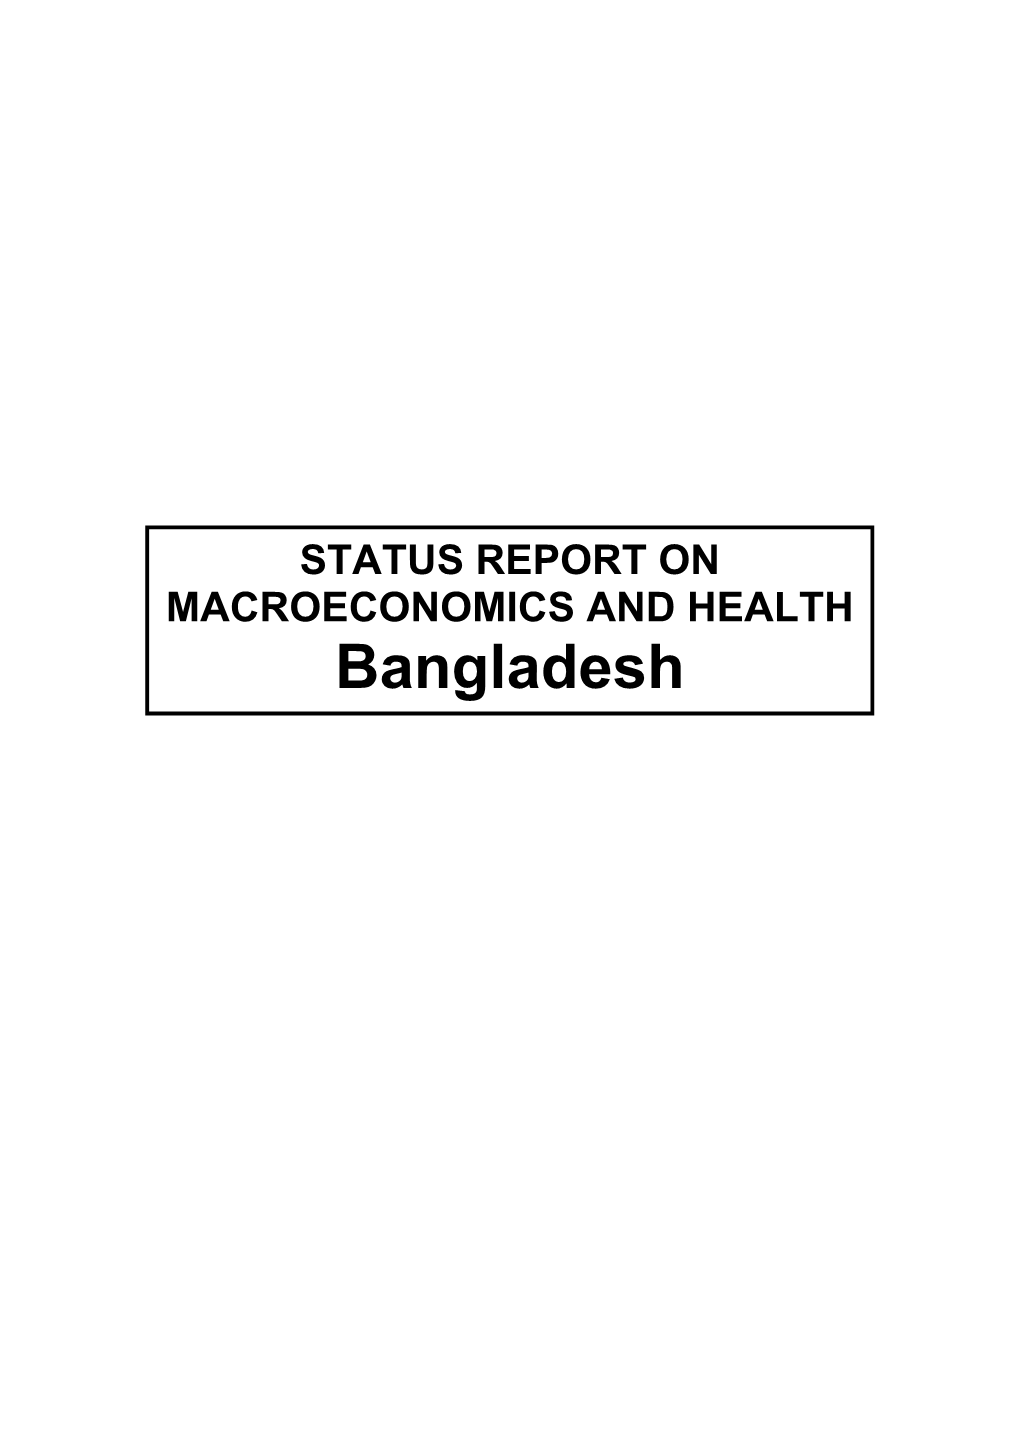 Country Paper Bangladesh